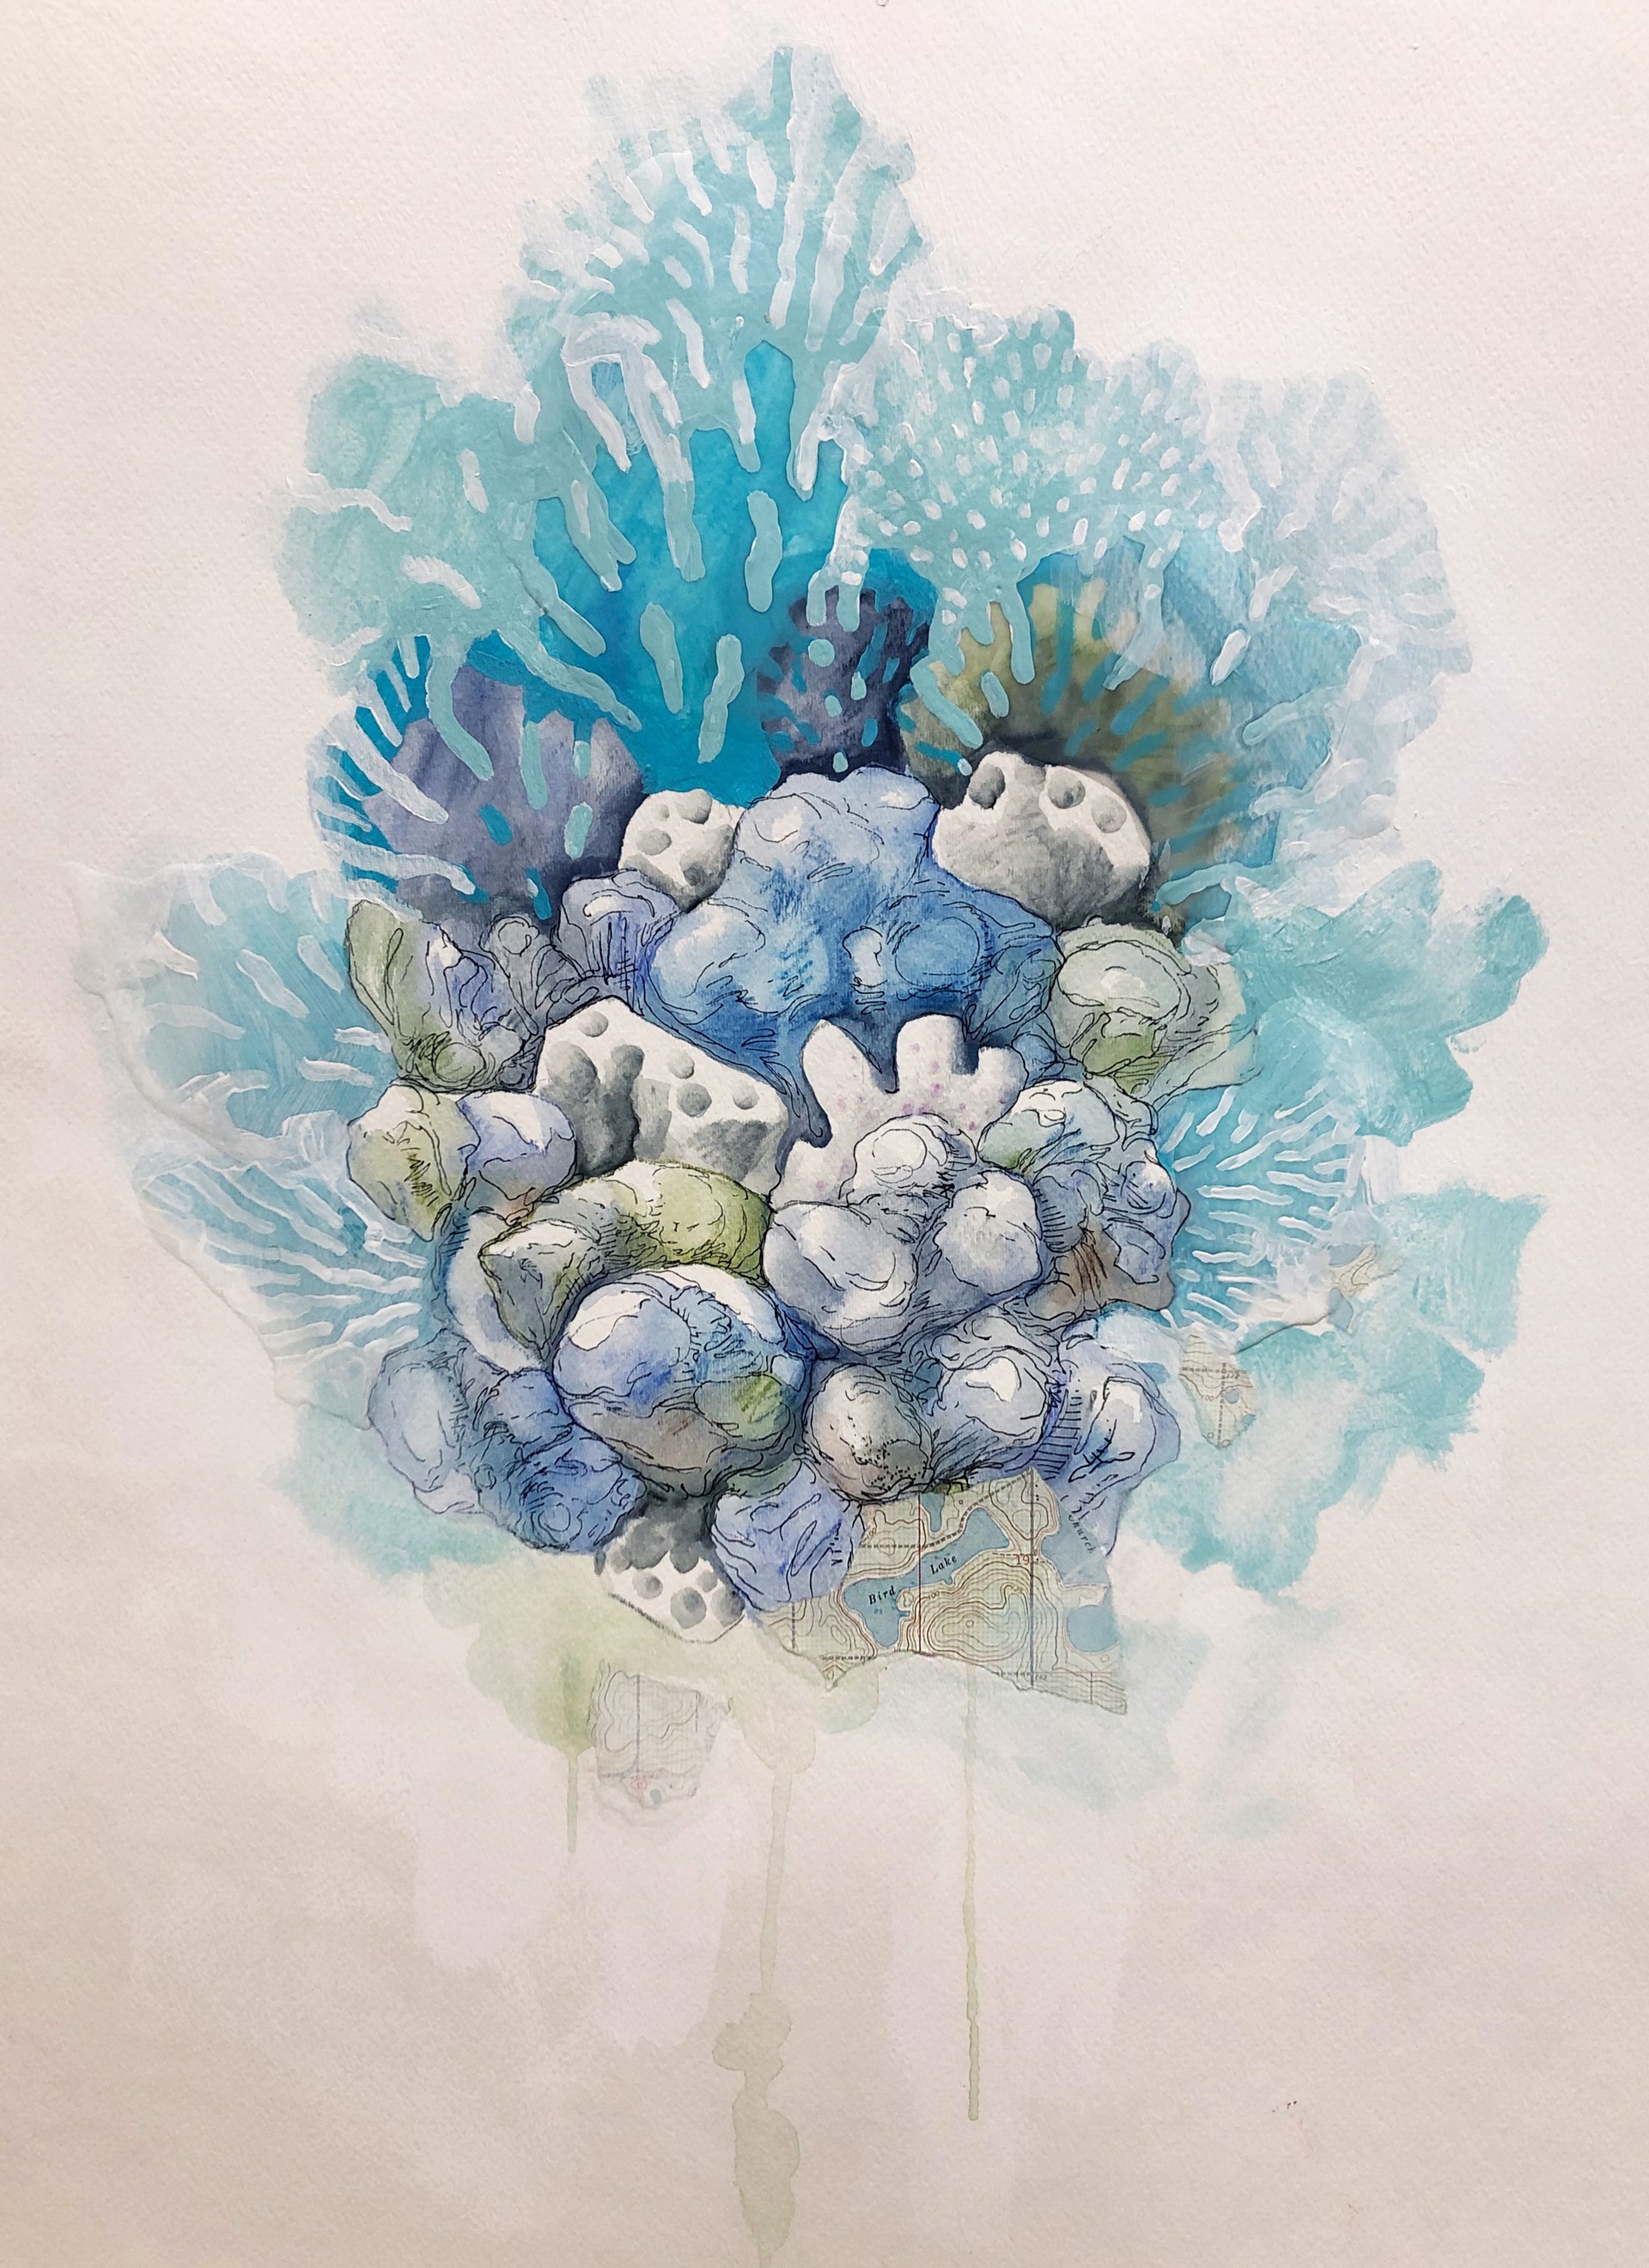 Reef Study II by Dustin Harewood